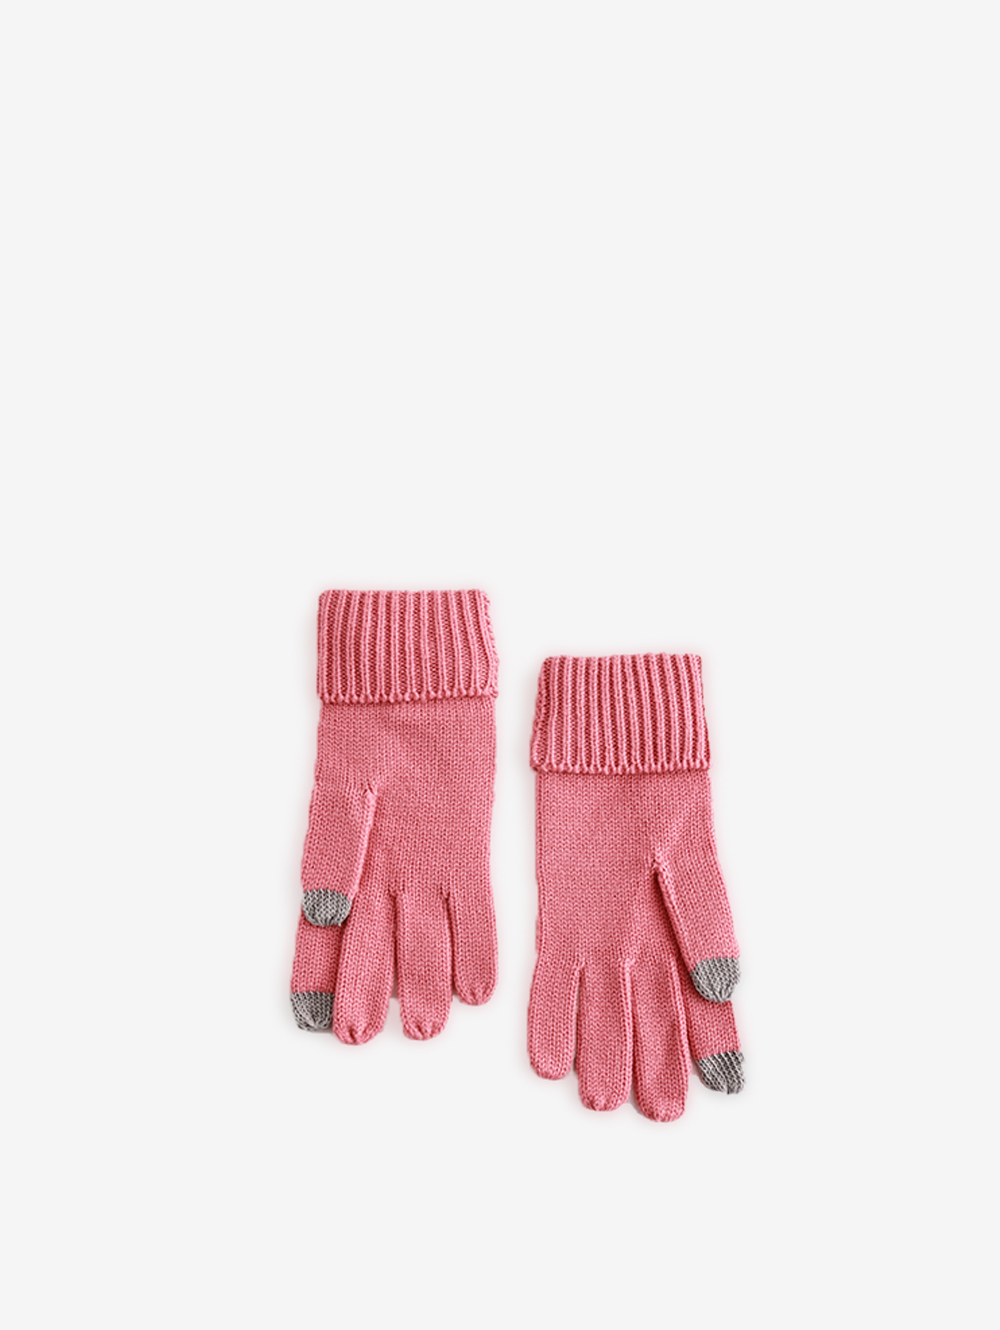 HUNTER 配件-PLAY素面針織手套(粉色)優惠推薦